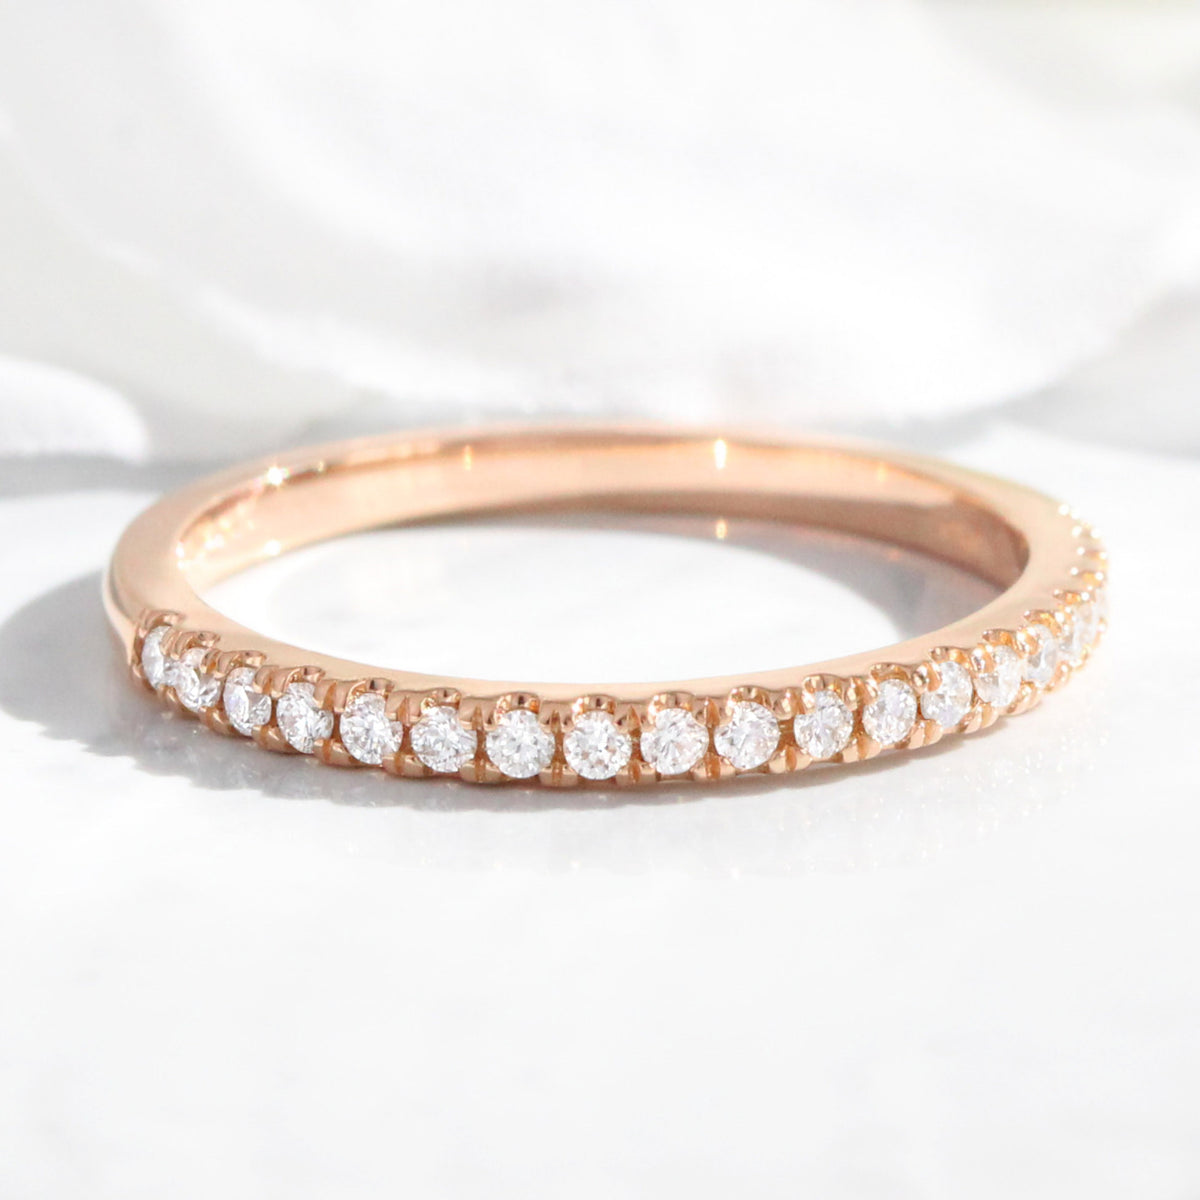 Pave diamond wedding ring rose gold half eternity wedding band la more design jewelry